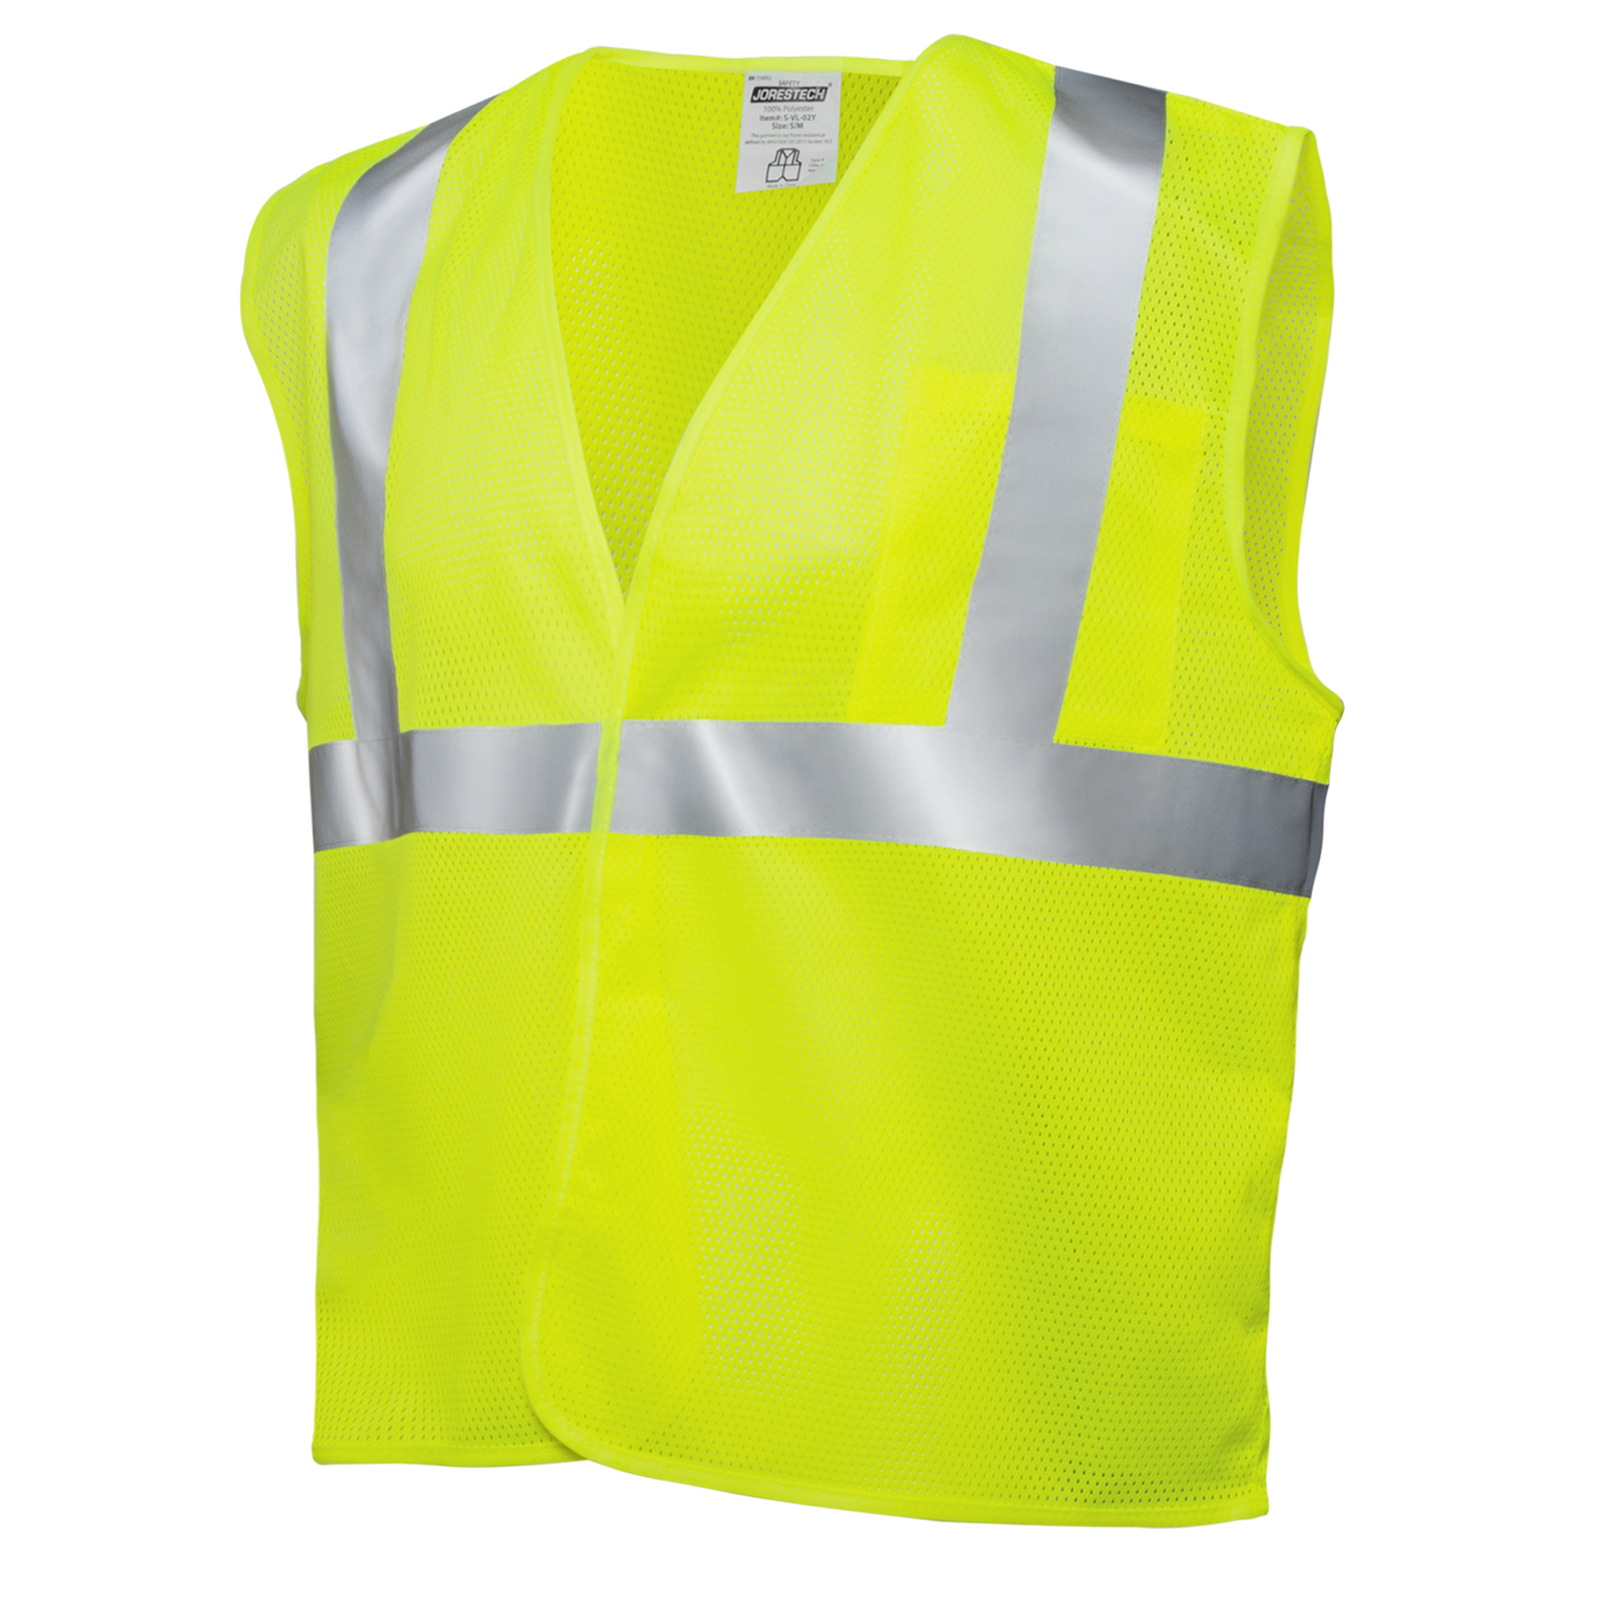 Two ToneHi Vis Reflective Pink Safety Vest for Traffic, Security, Volunteer  Work